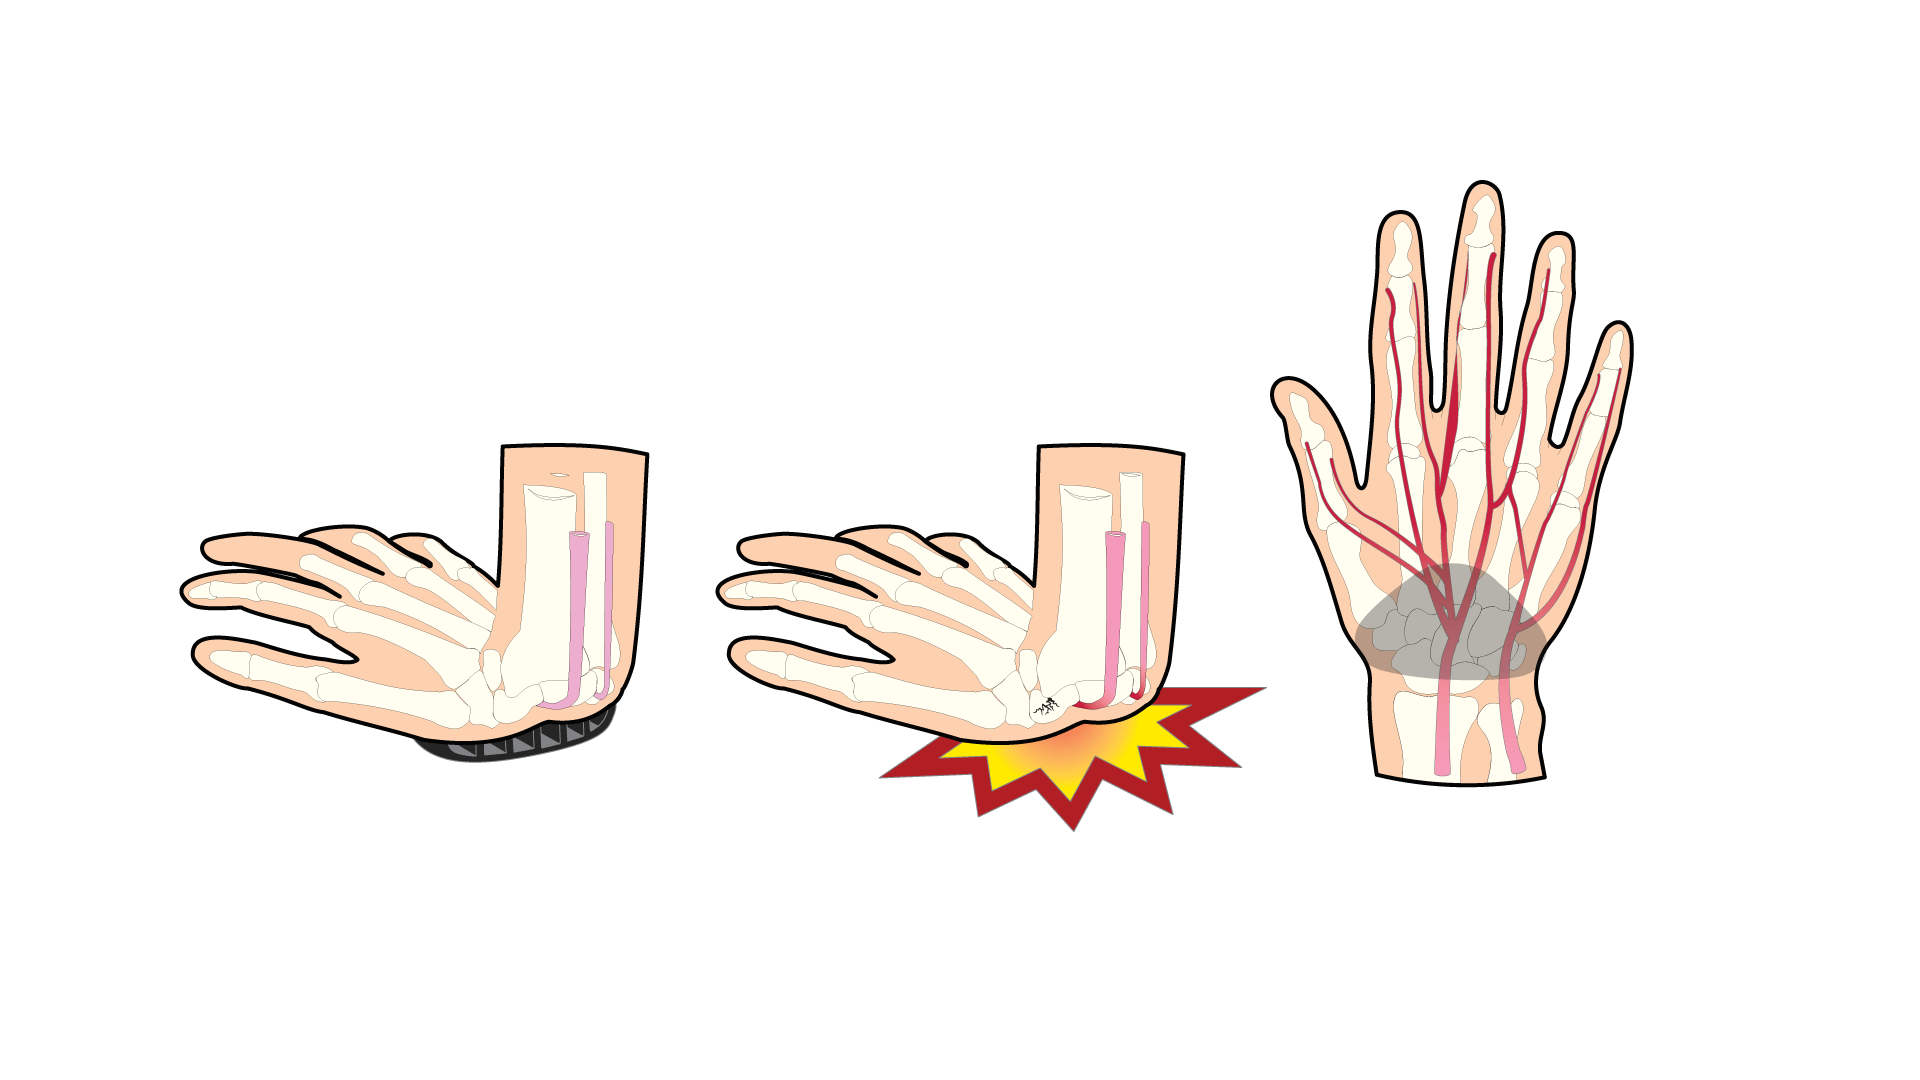 skin clipart hand palm